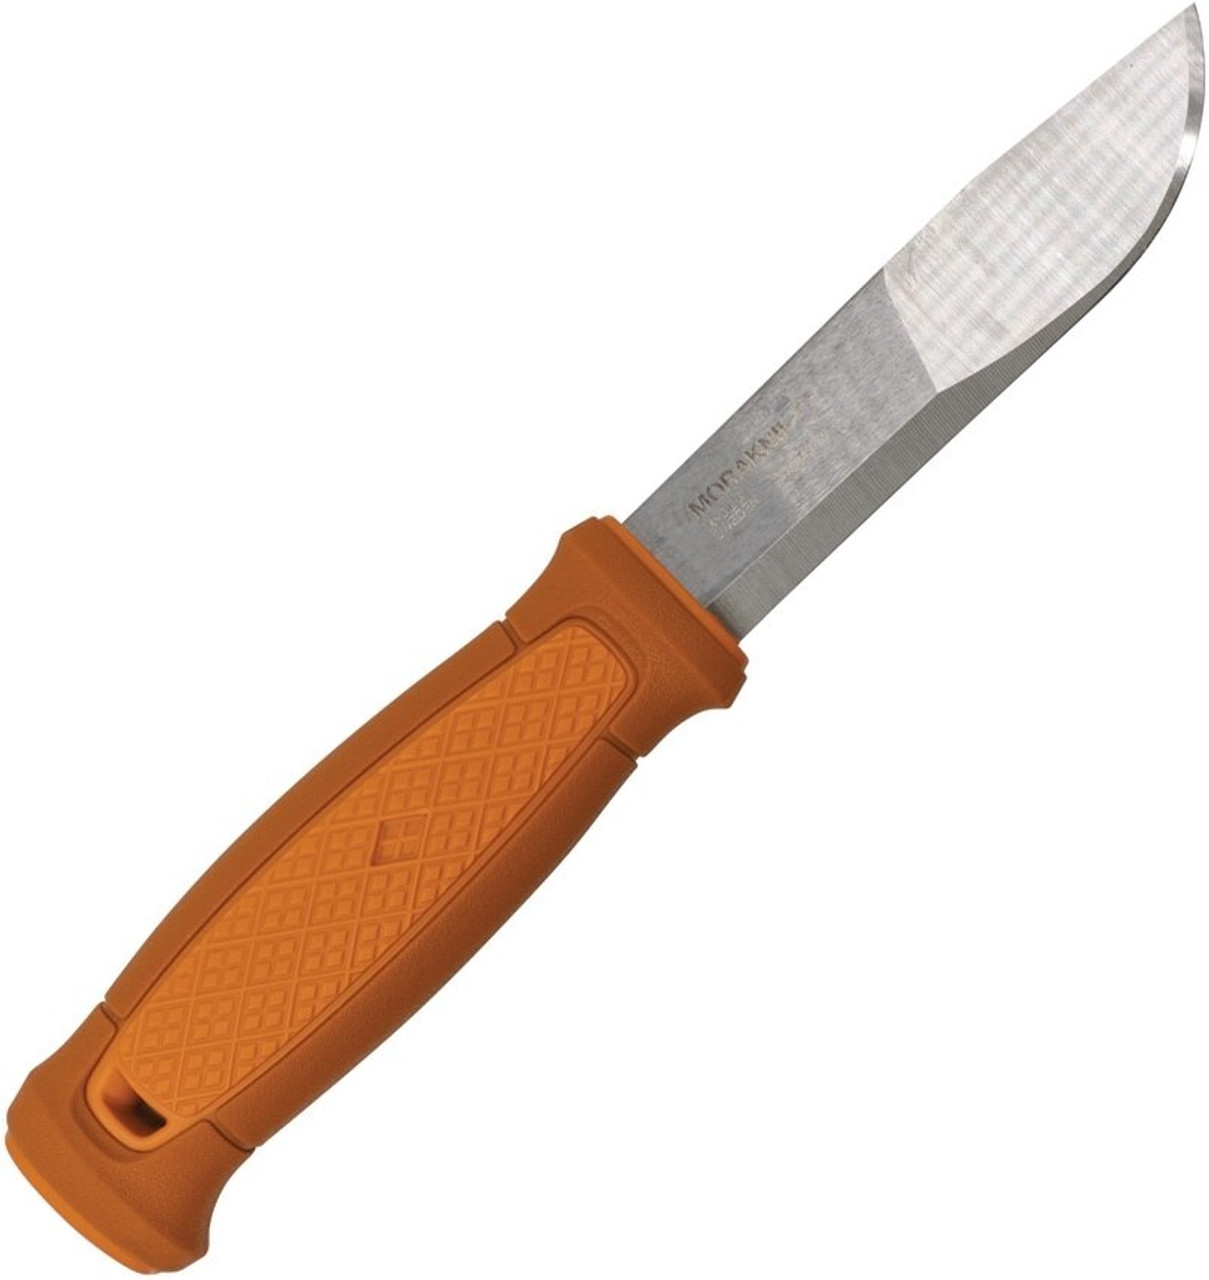 Morakniv Kansbol Fixed Blade, 4.5" Satin Stainless Blade, Burnt Orange Polypropylene Handle, Multi-Mount Sheath